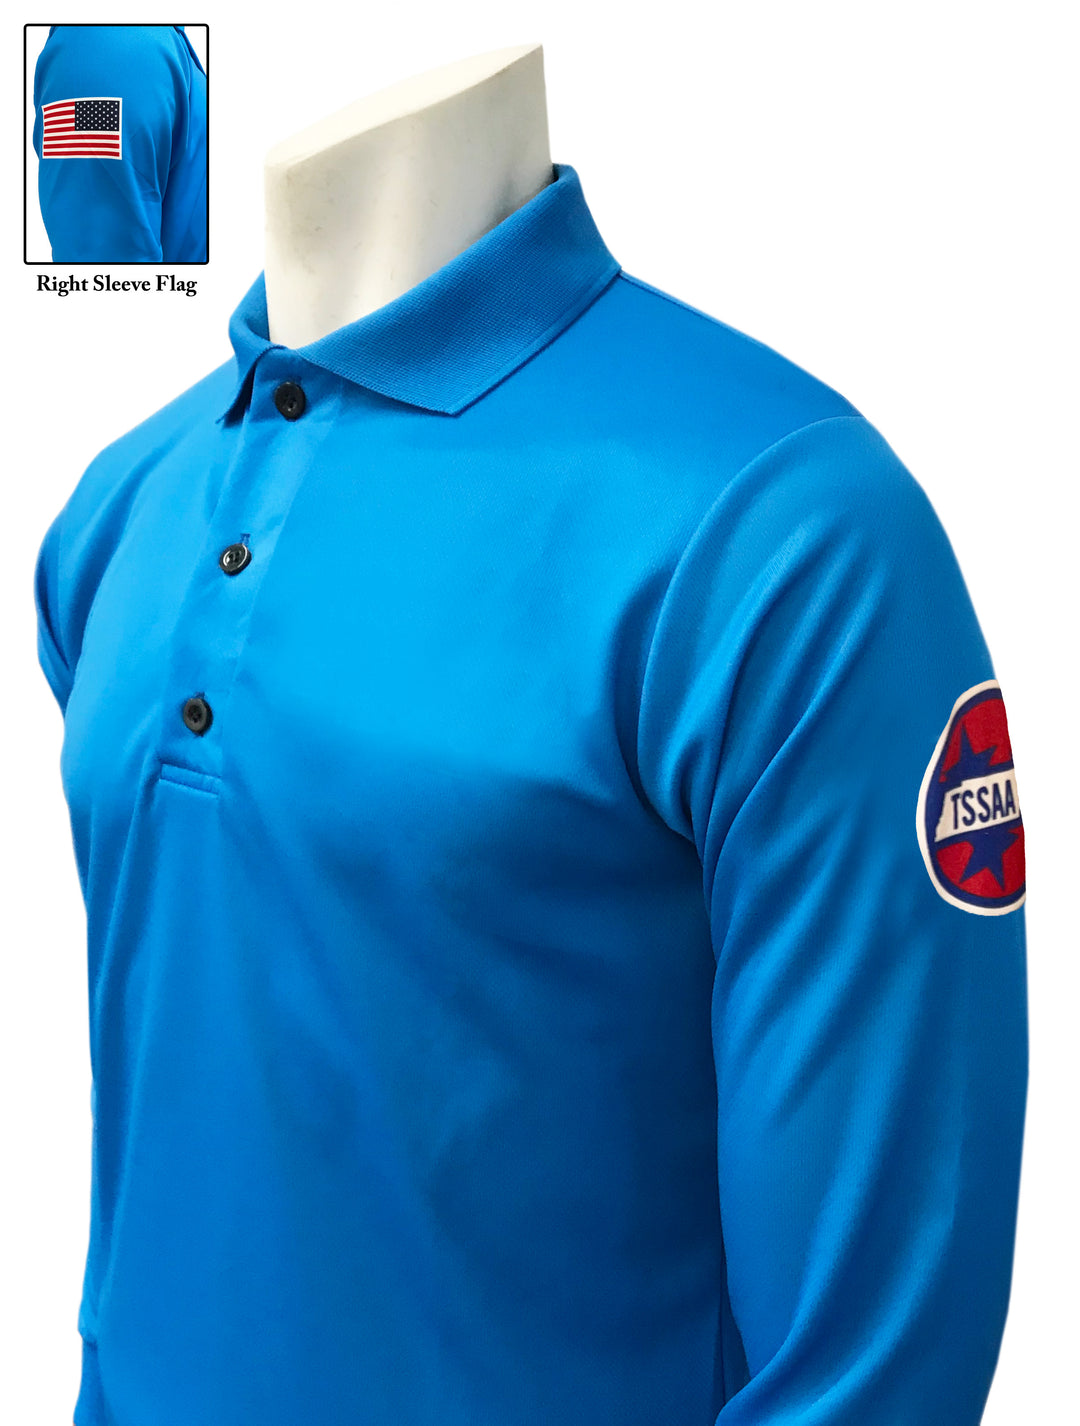 USA401TN - Smitty *NEW* "Made in USA" - BRIGHT BLUE - TSSAA Men's Volleyball Long Sleeve Shirt